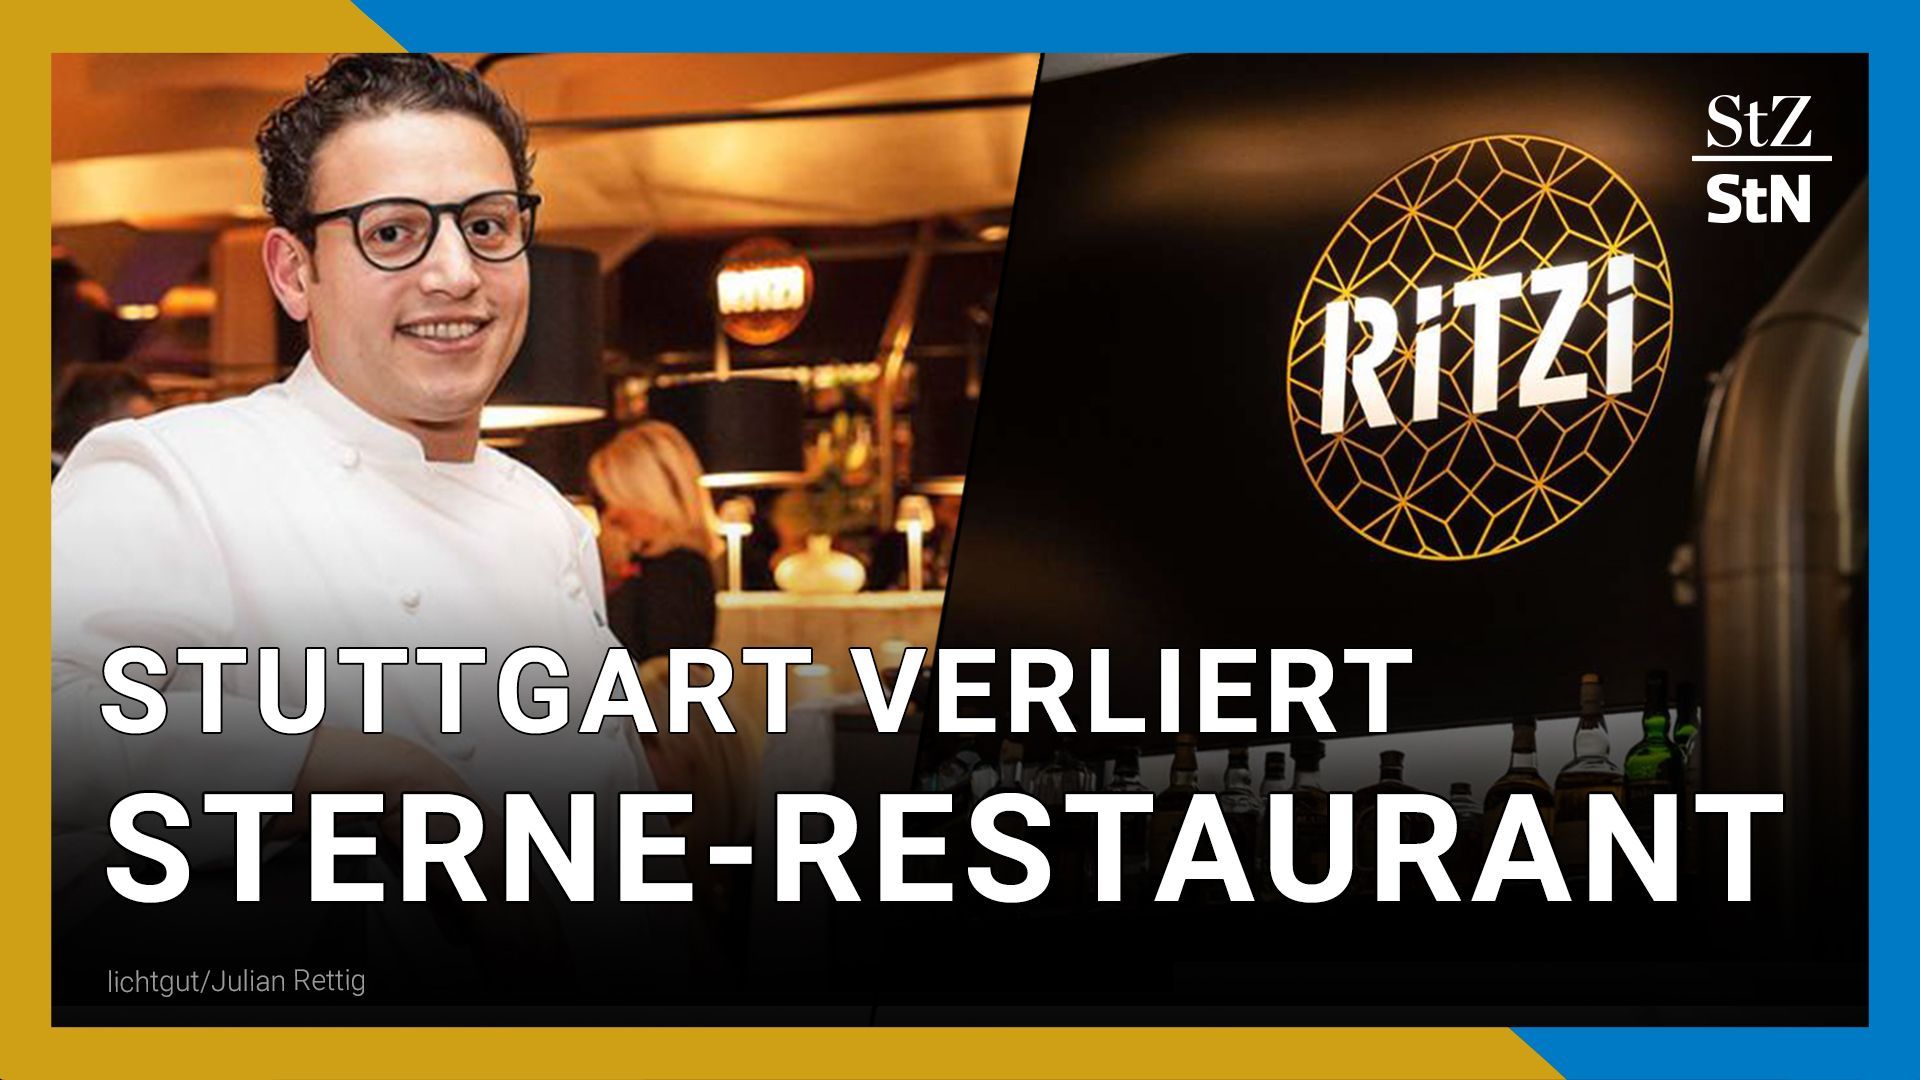 Trotz erneutem Michelin-Stern: Stuttgarter Restaurant Ritzi meldet Insolvenz an